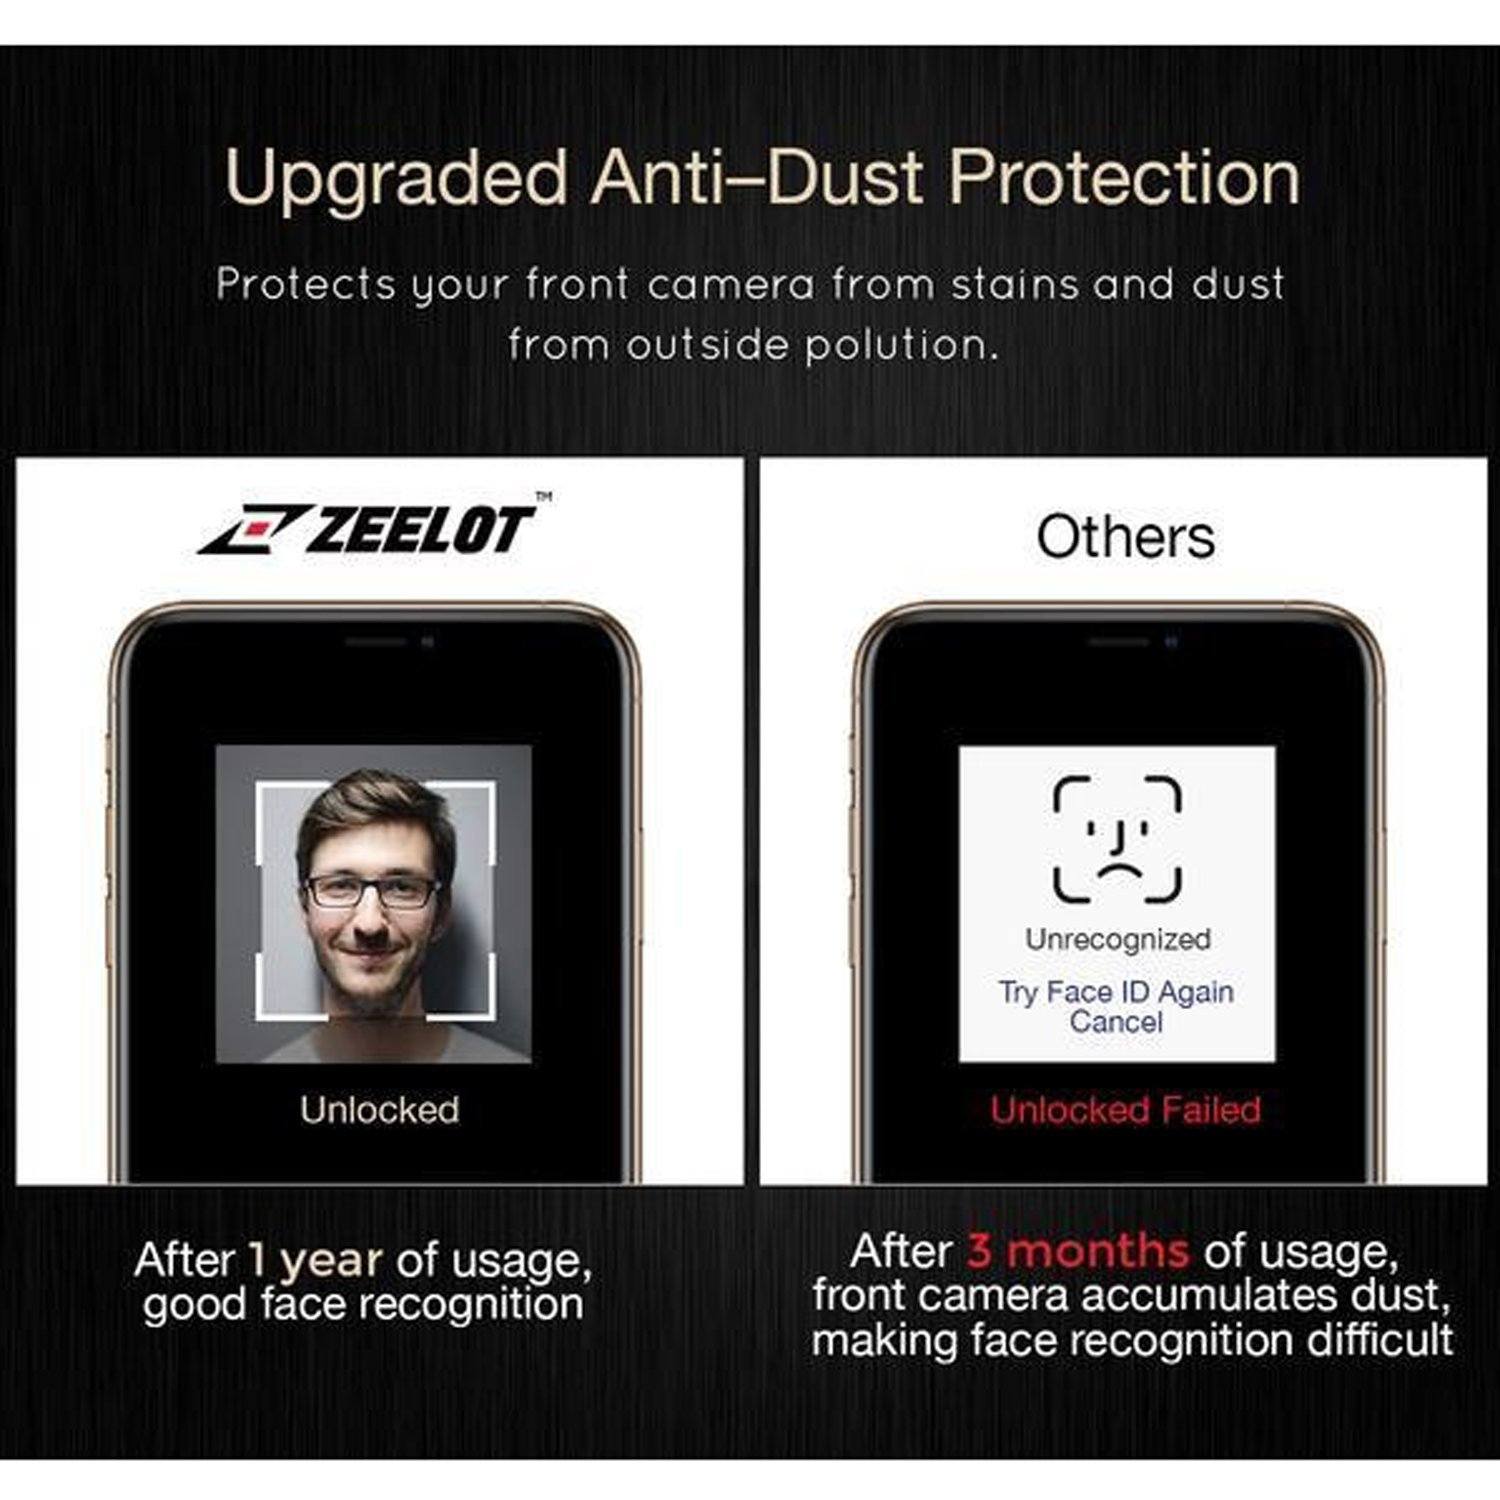 ZEELOT PureGlass 2.5D Tempered Glass Screen Protector for Google Pixel 4, Clear Tempered Glass ZEELOT 